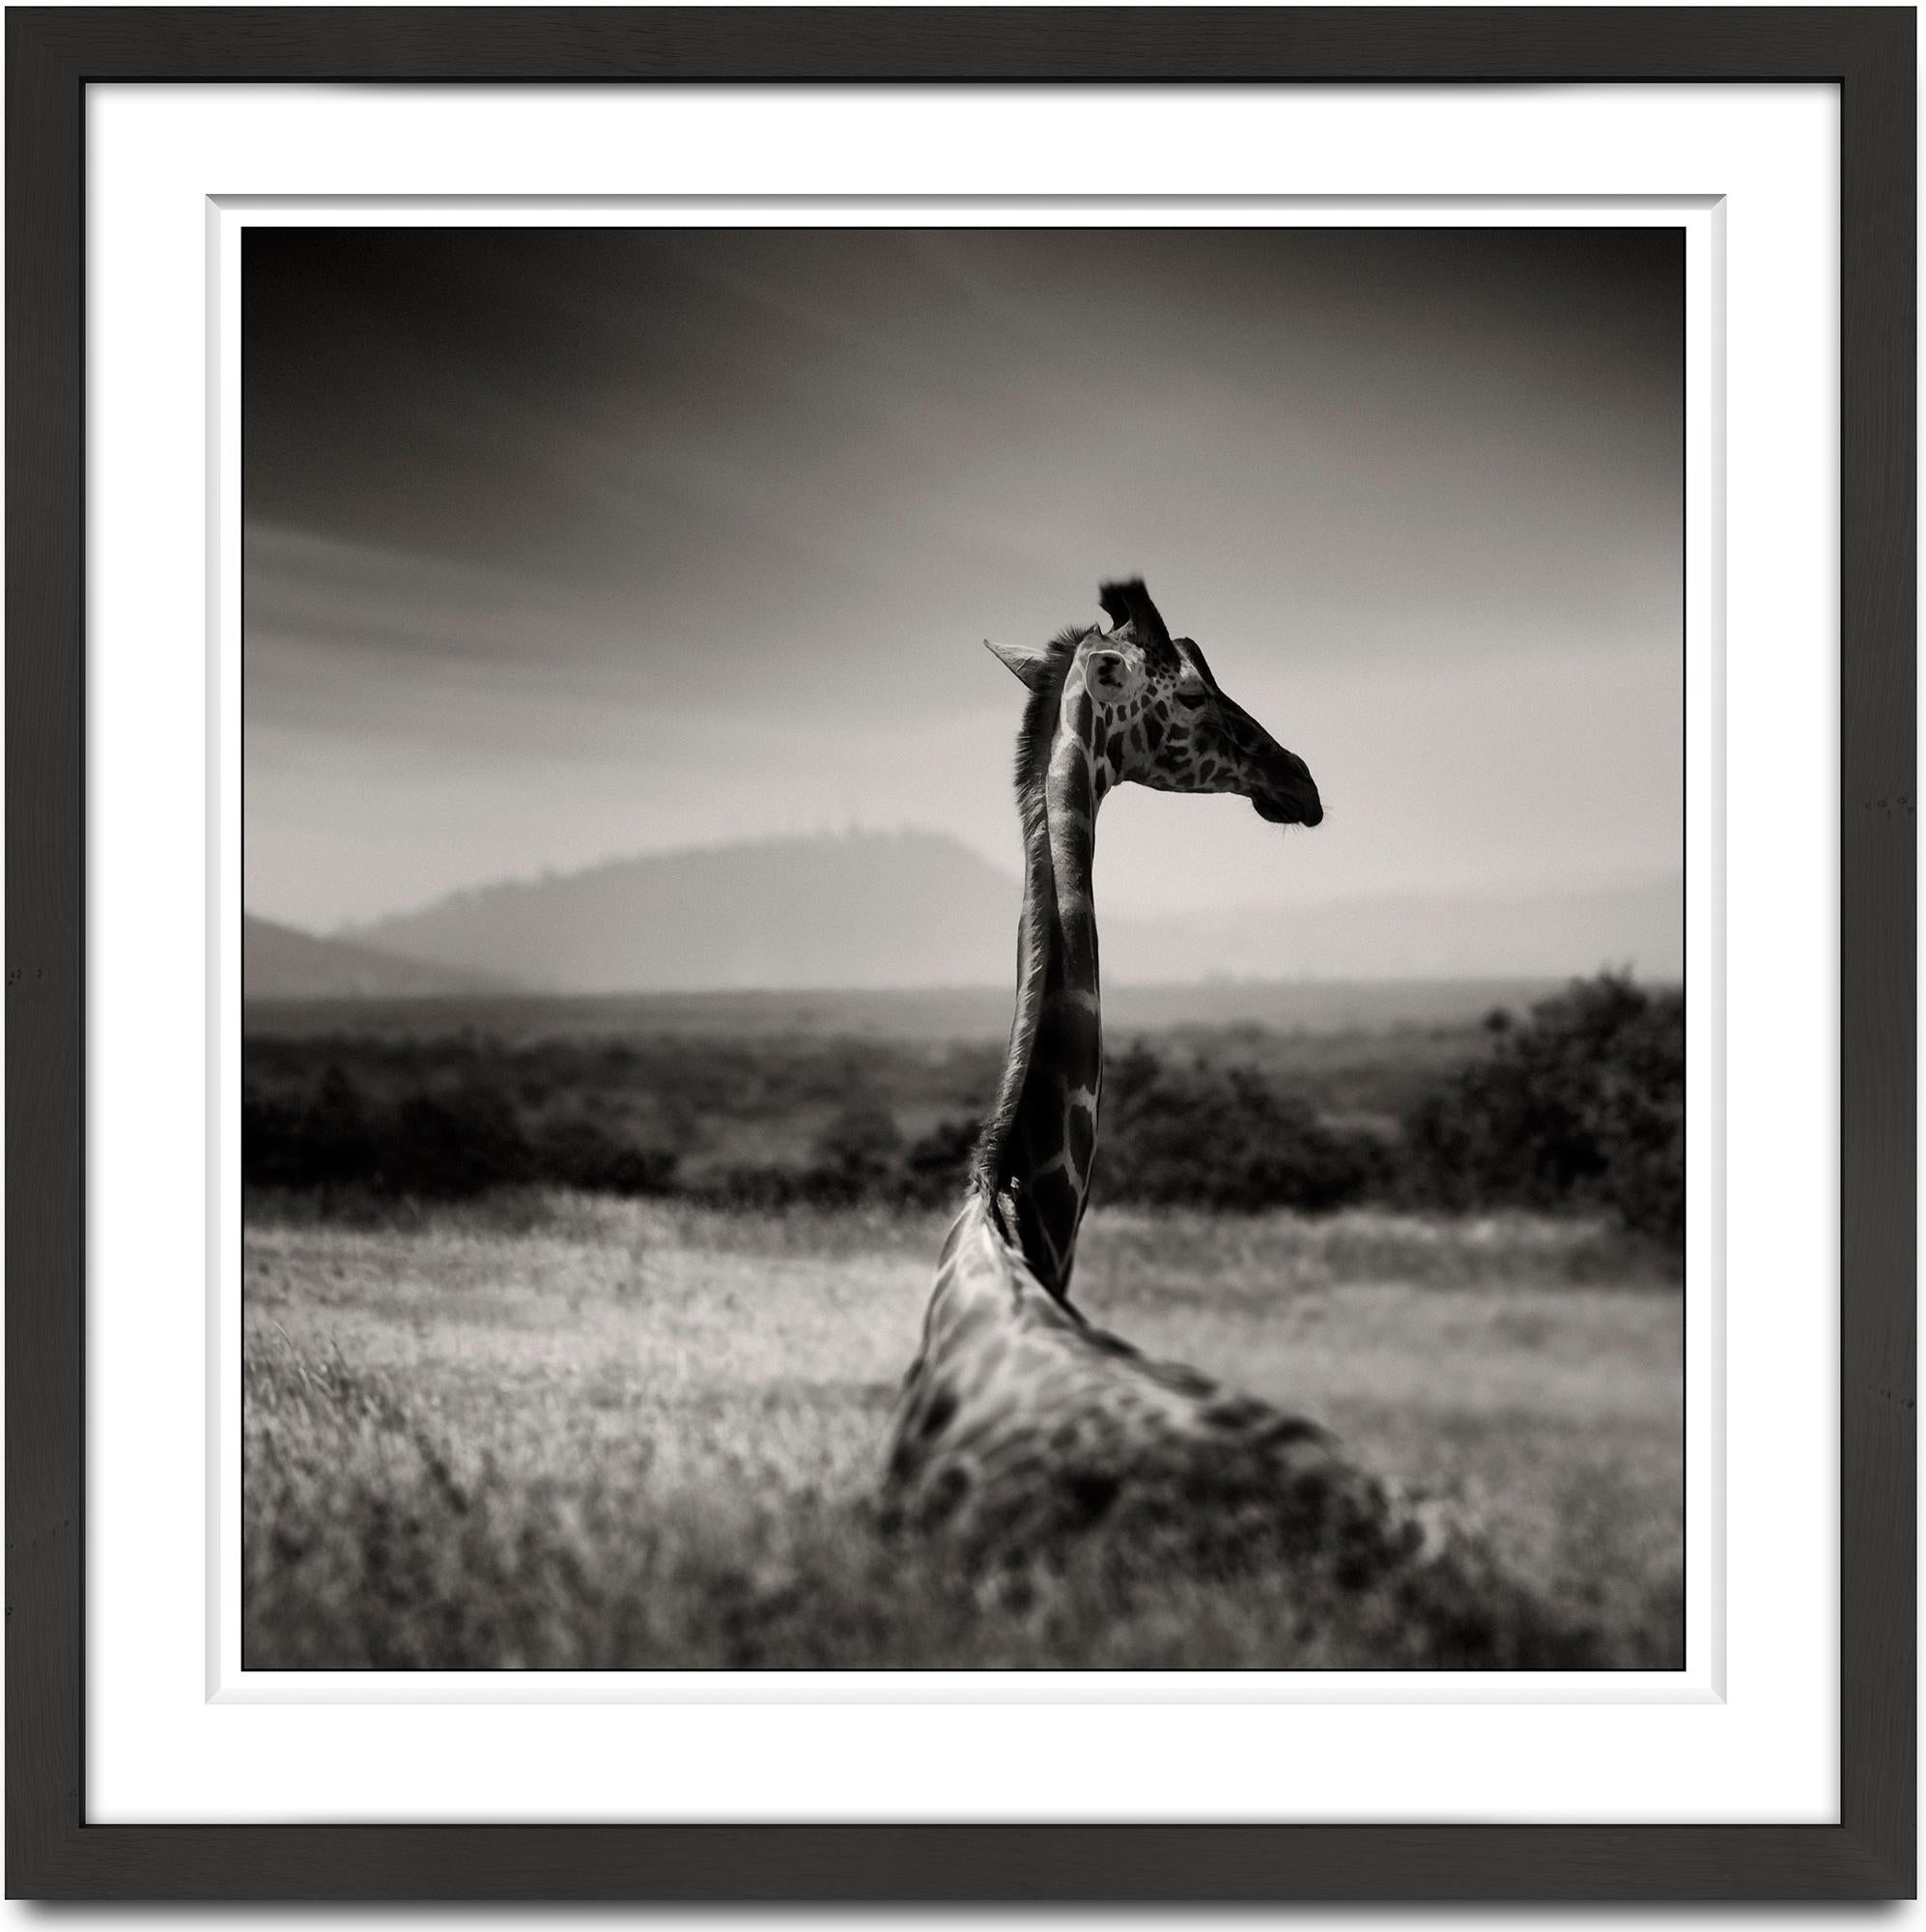 Joachim Schmeisser Landscape Photograph - Lying Giraffe, animal, wildlife, black and white photography, africa